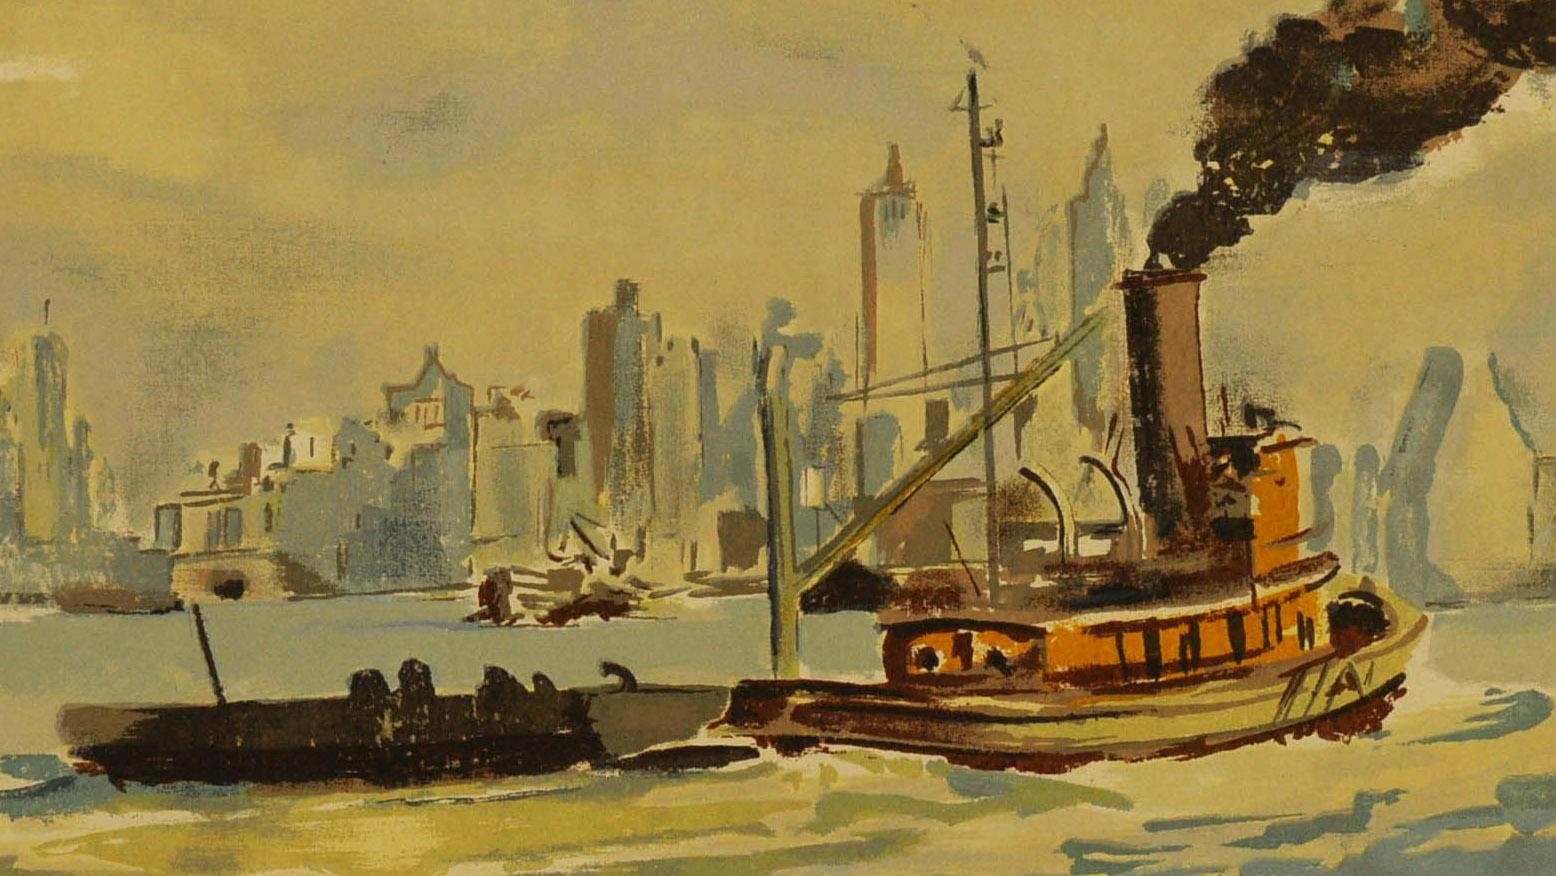 Tug Boat in New York Harbor - American Realist Print by Reginald Marsh